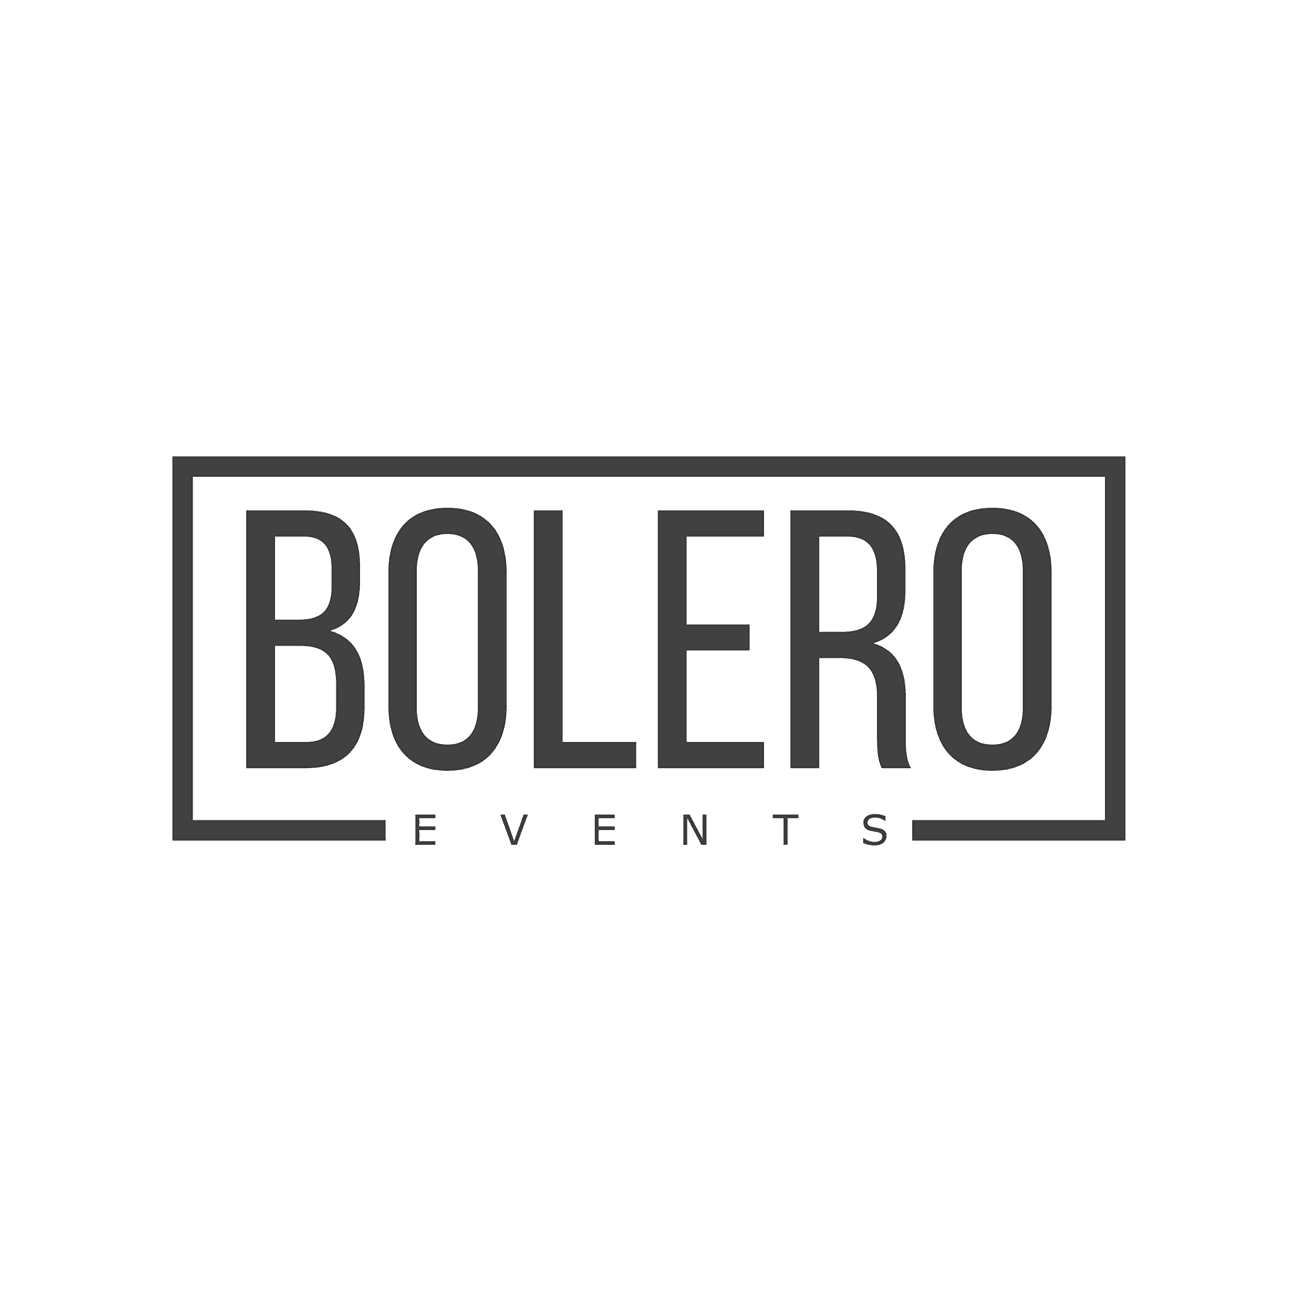 Bolero Events